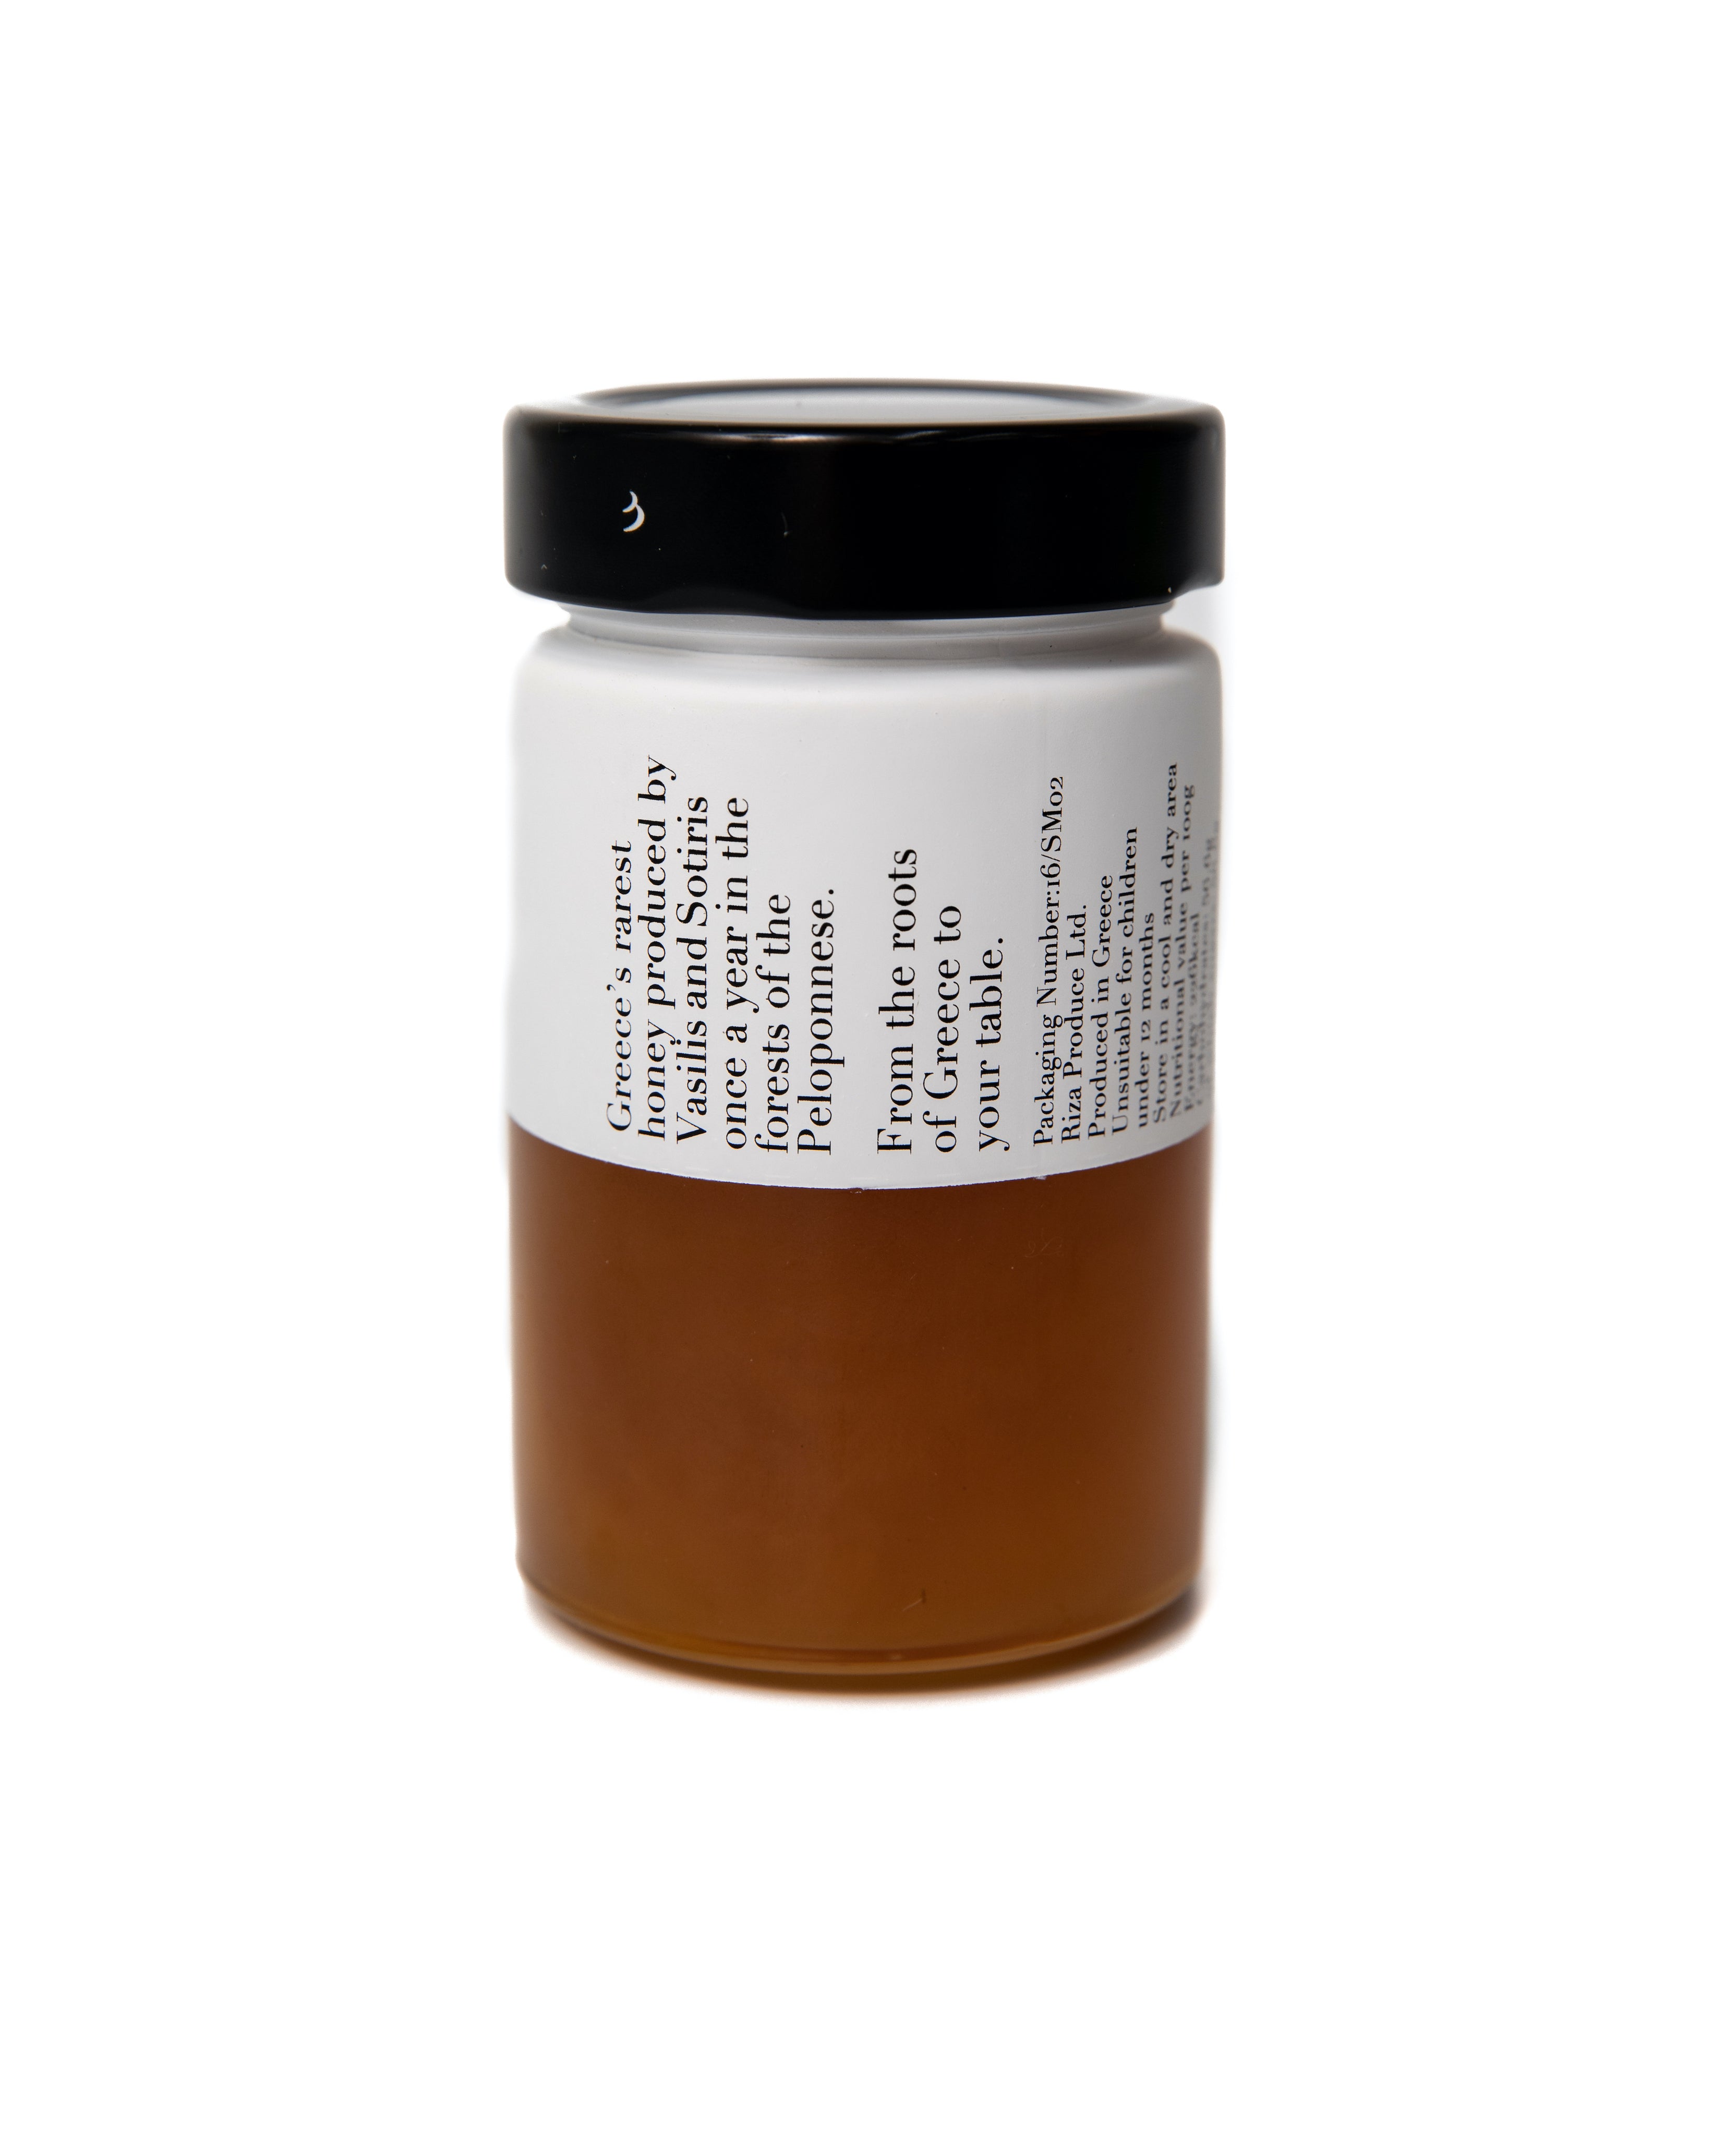 Fir Tree Honey 250gr (Limited Production)